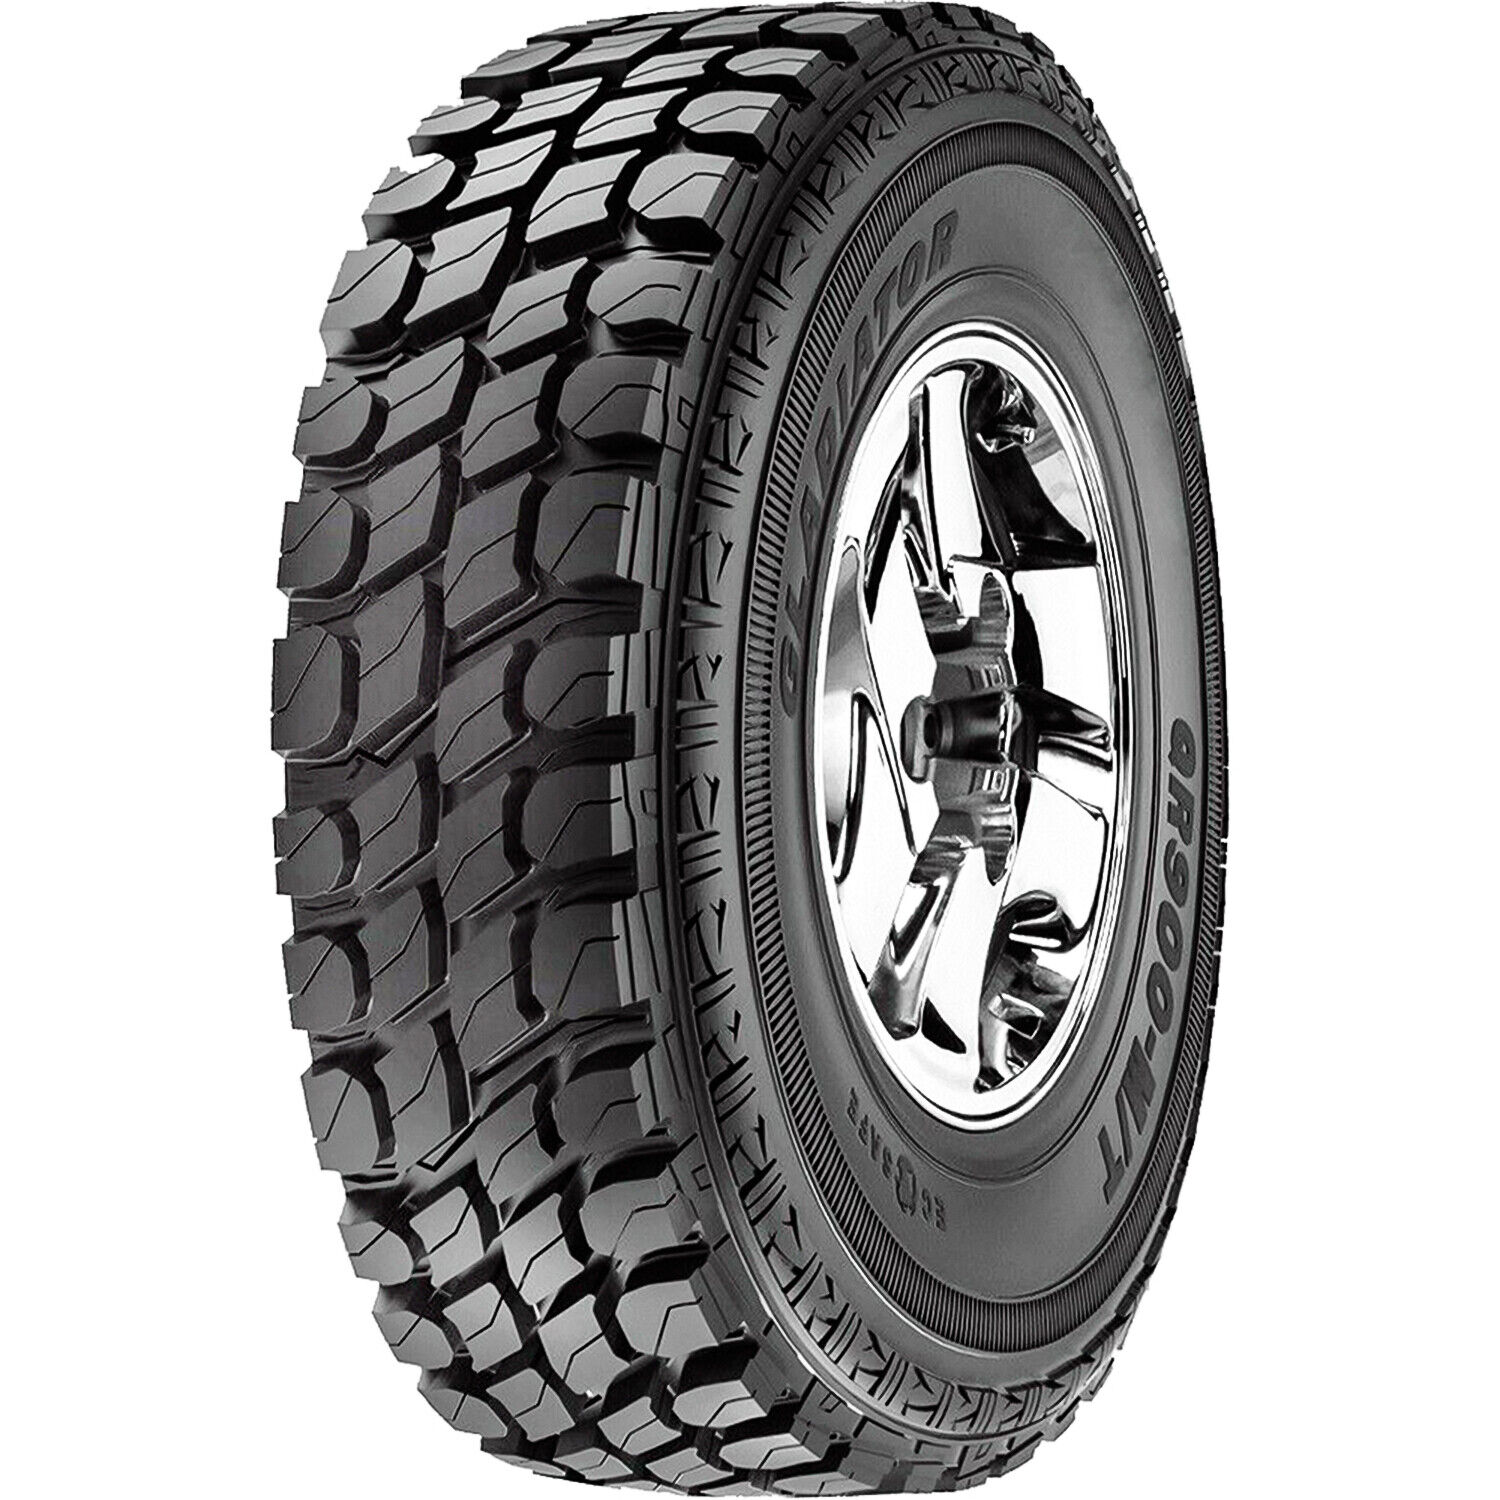 2 Tires Gladiator QR900-M/T LT 33X12.50R20 Load E 10 Ply MT Mud